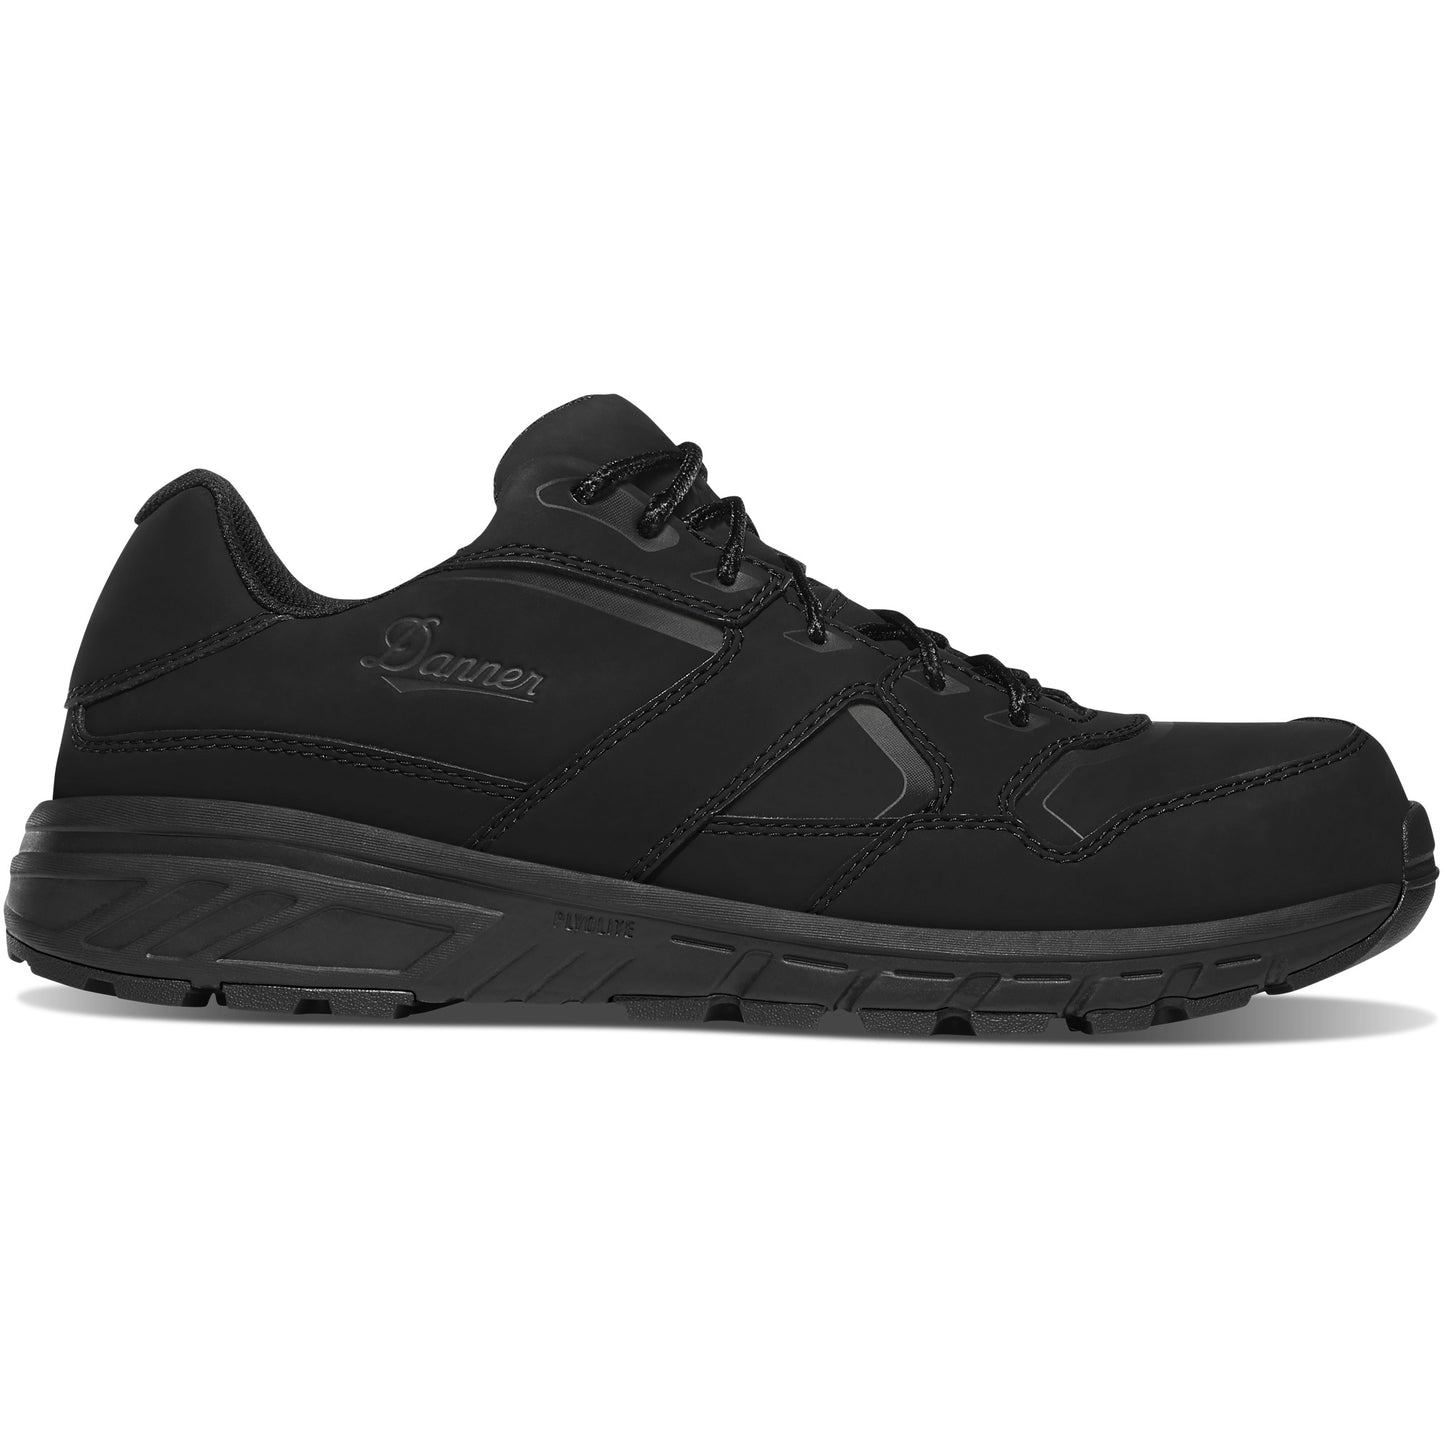 12310 Danner Low Top Non Metallic Toe Sneaker (Black)